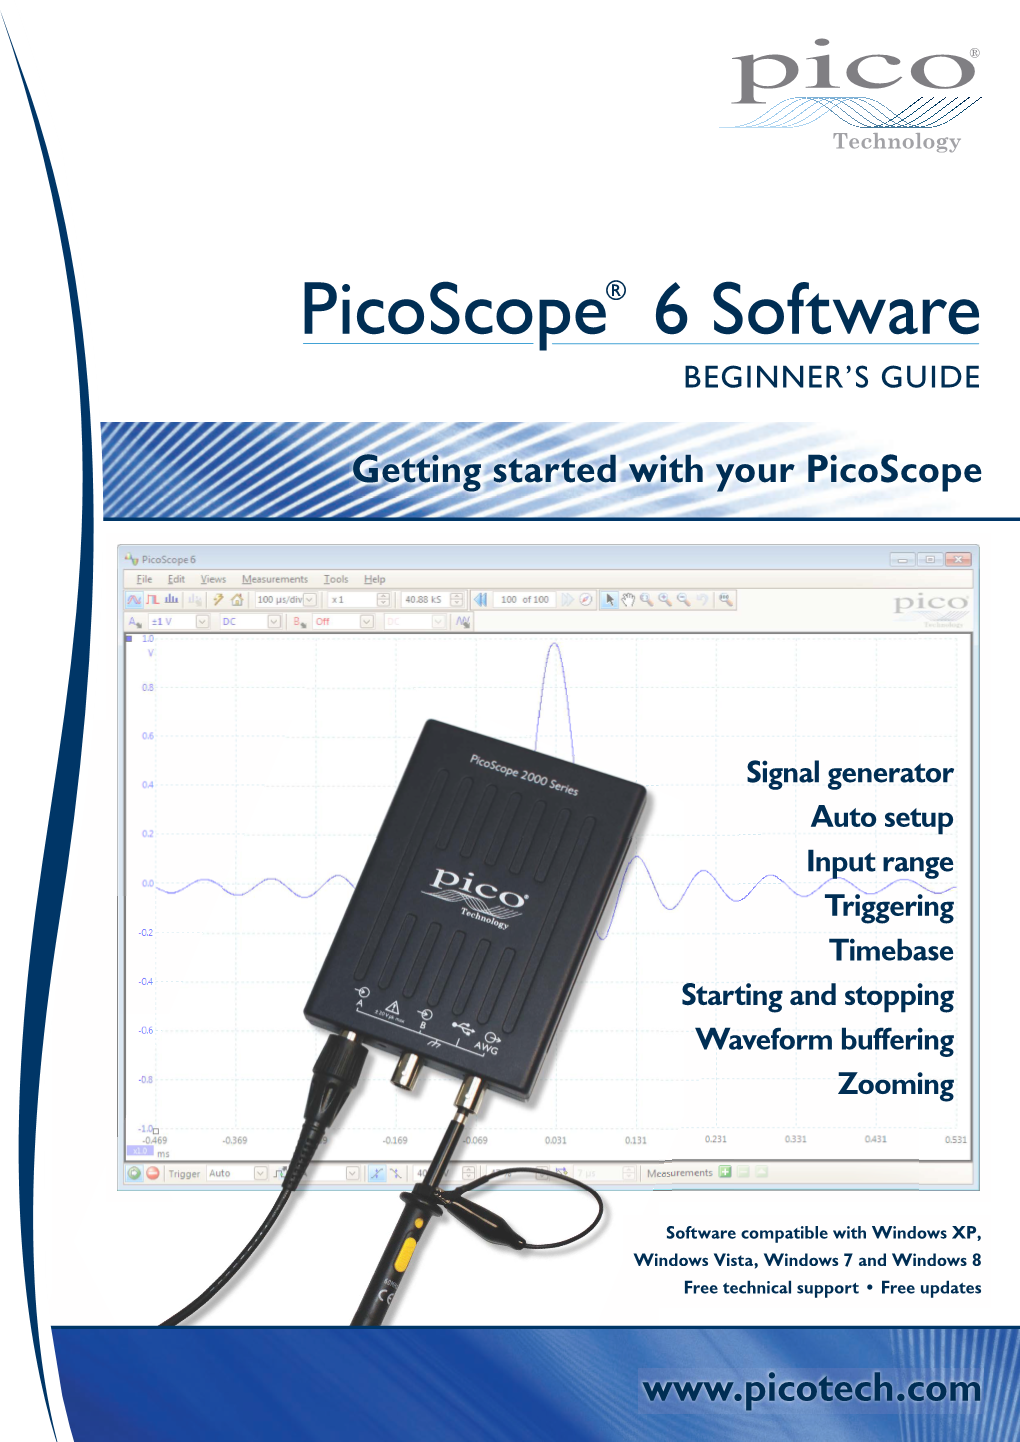 Picoscope 6 Software